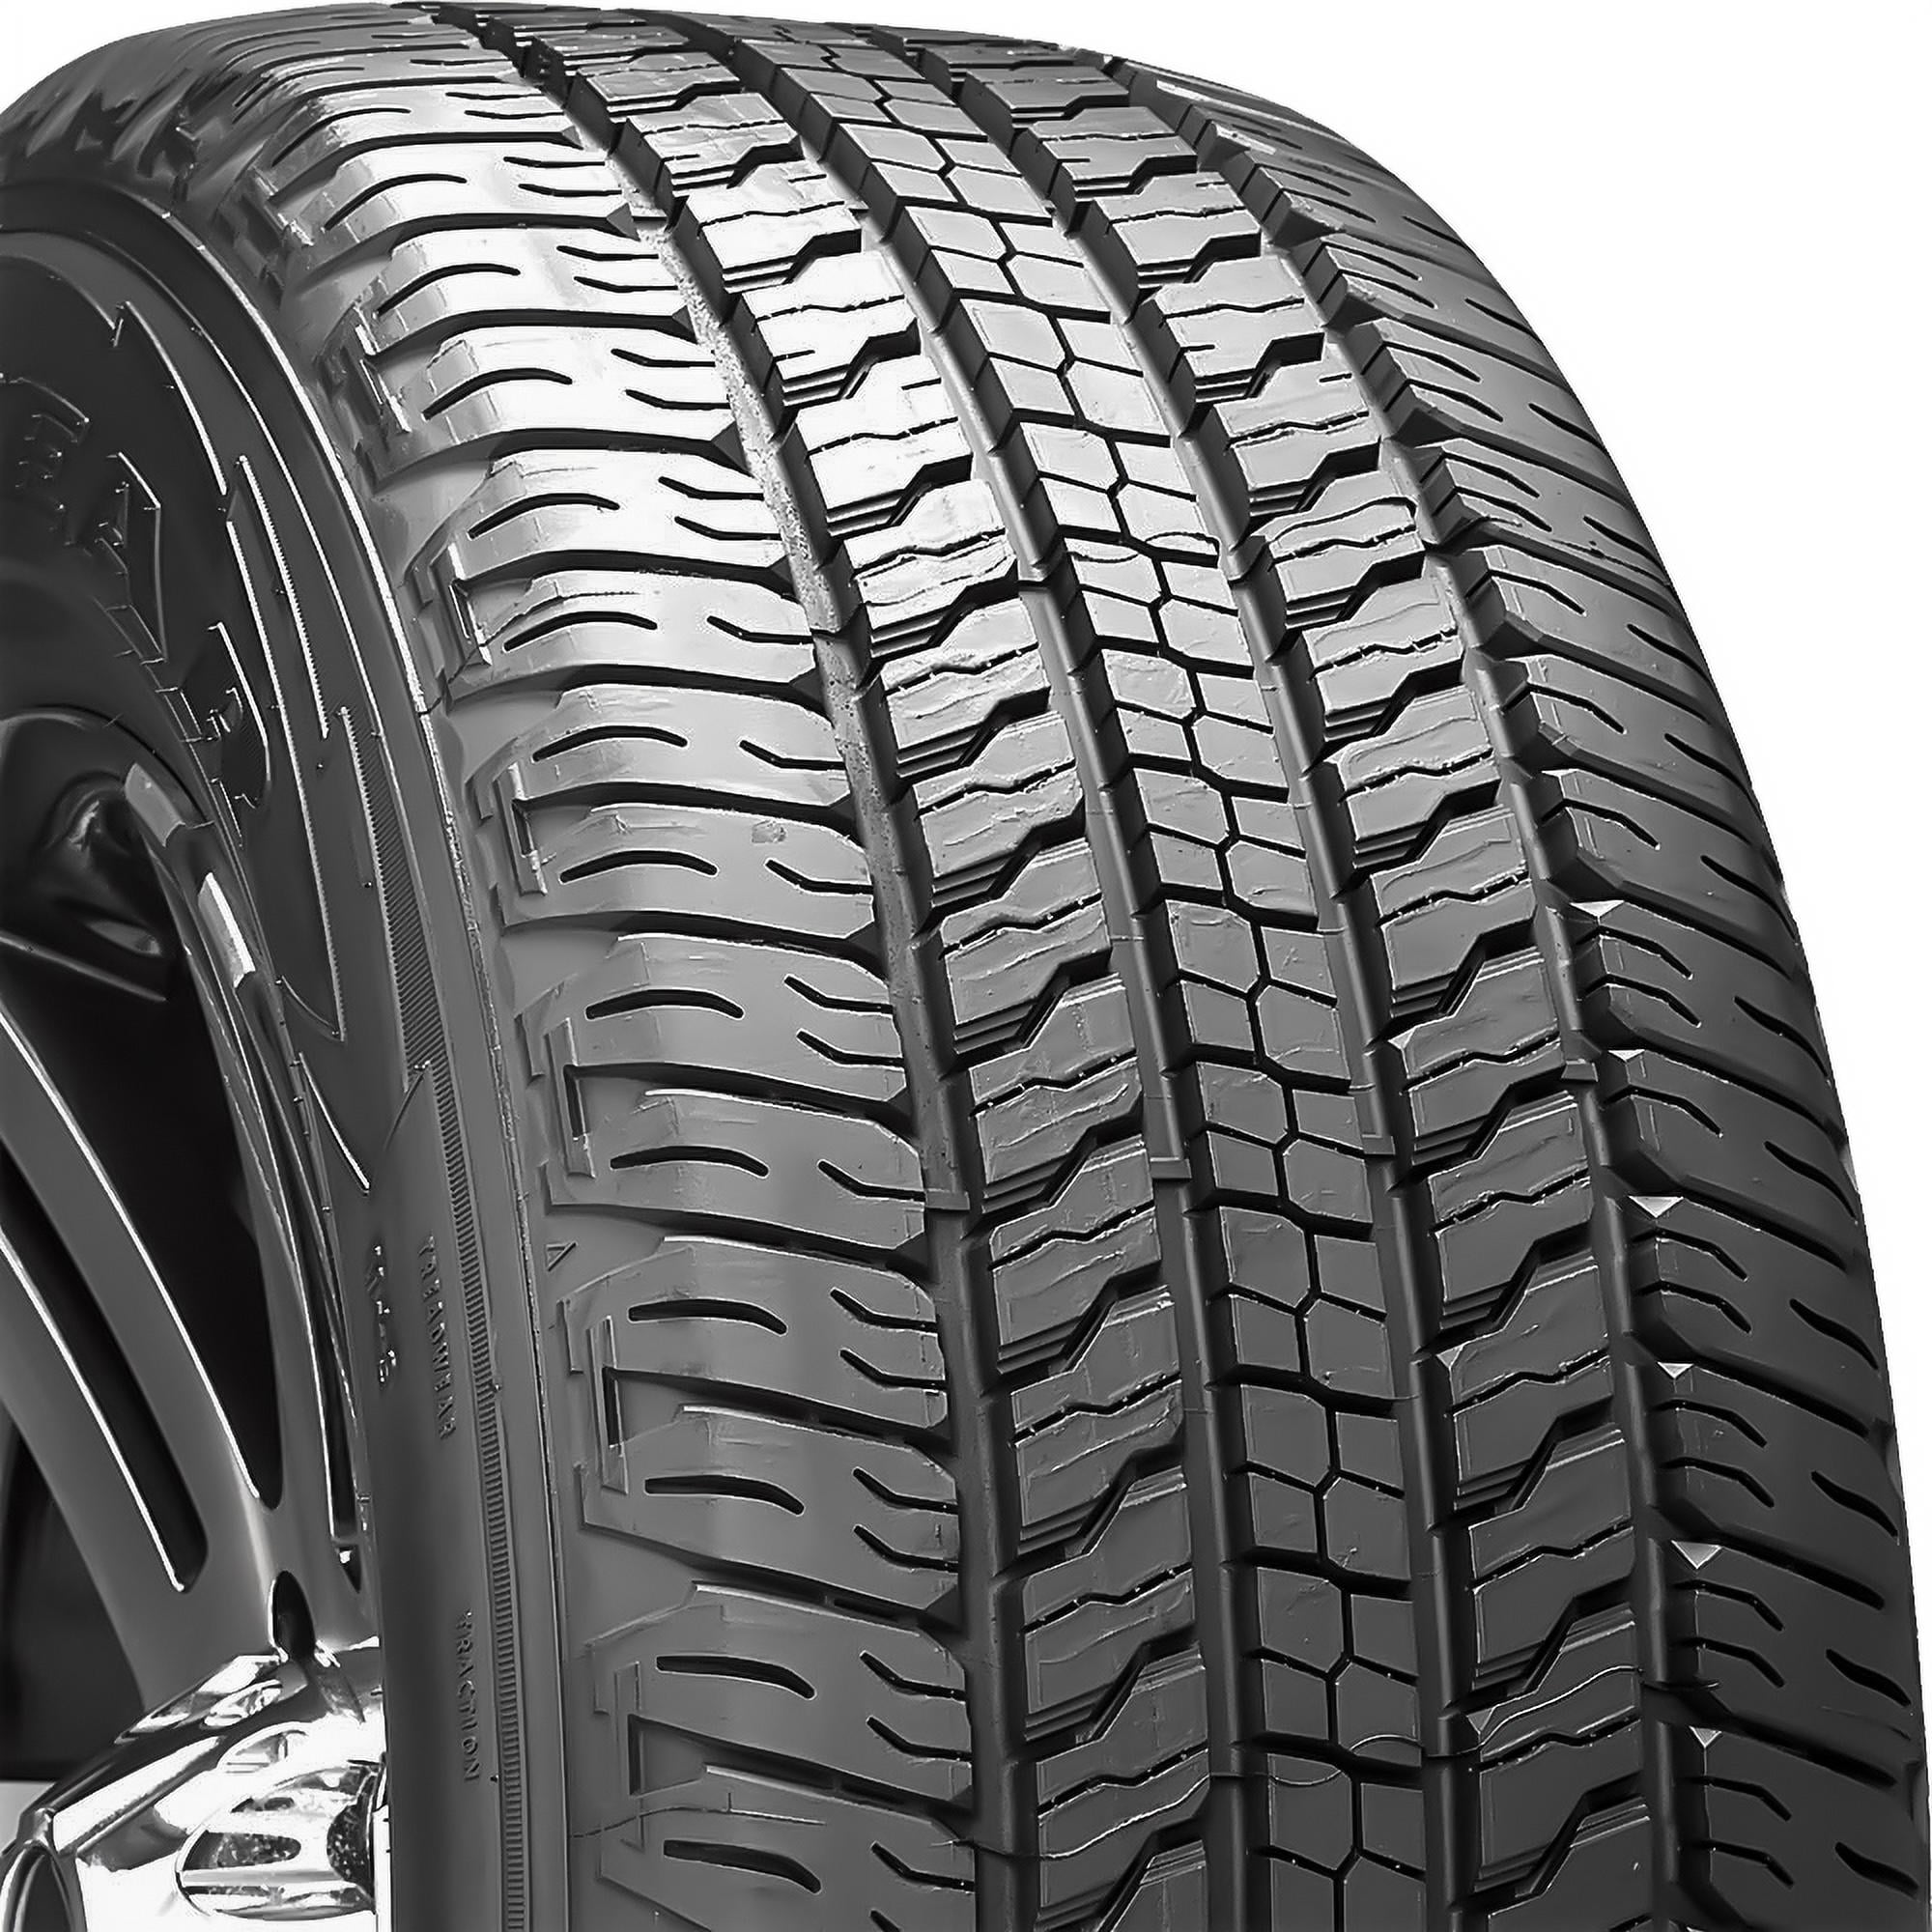 Goodyear Wrl Fortitude HT All-Season 265/65R18 114T Tire 